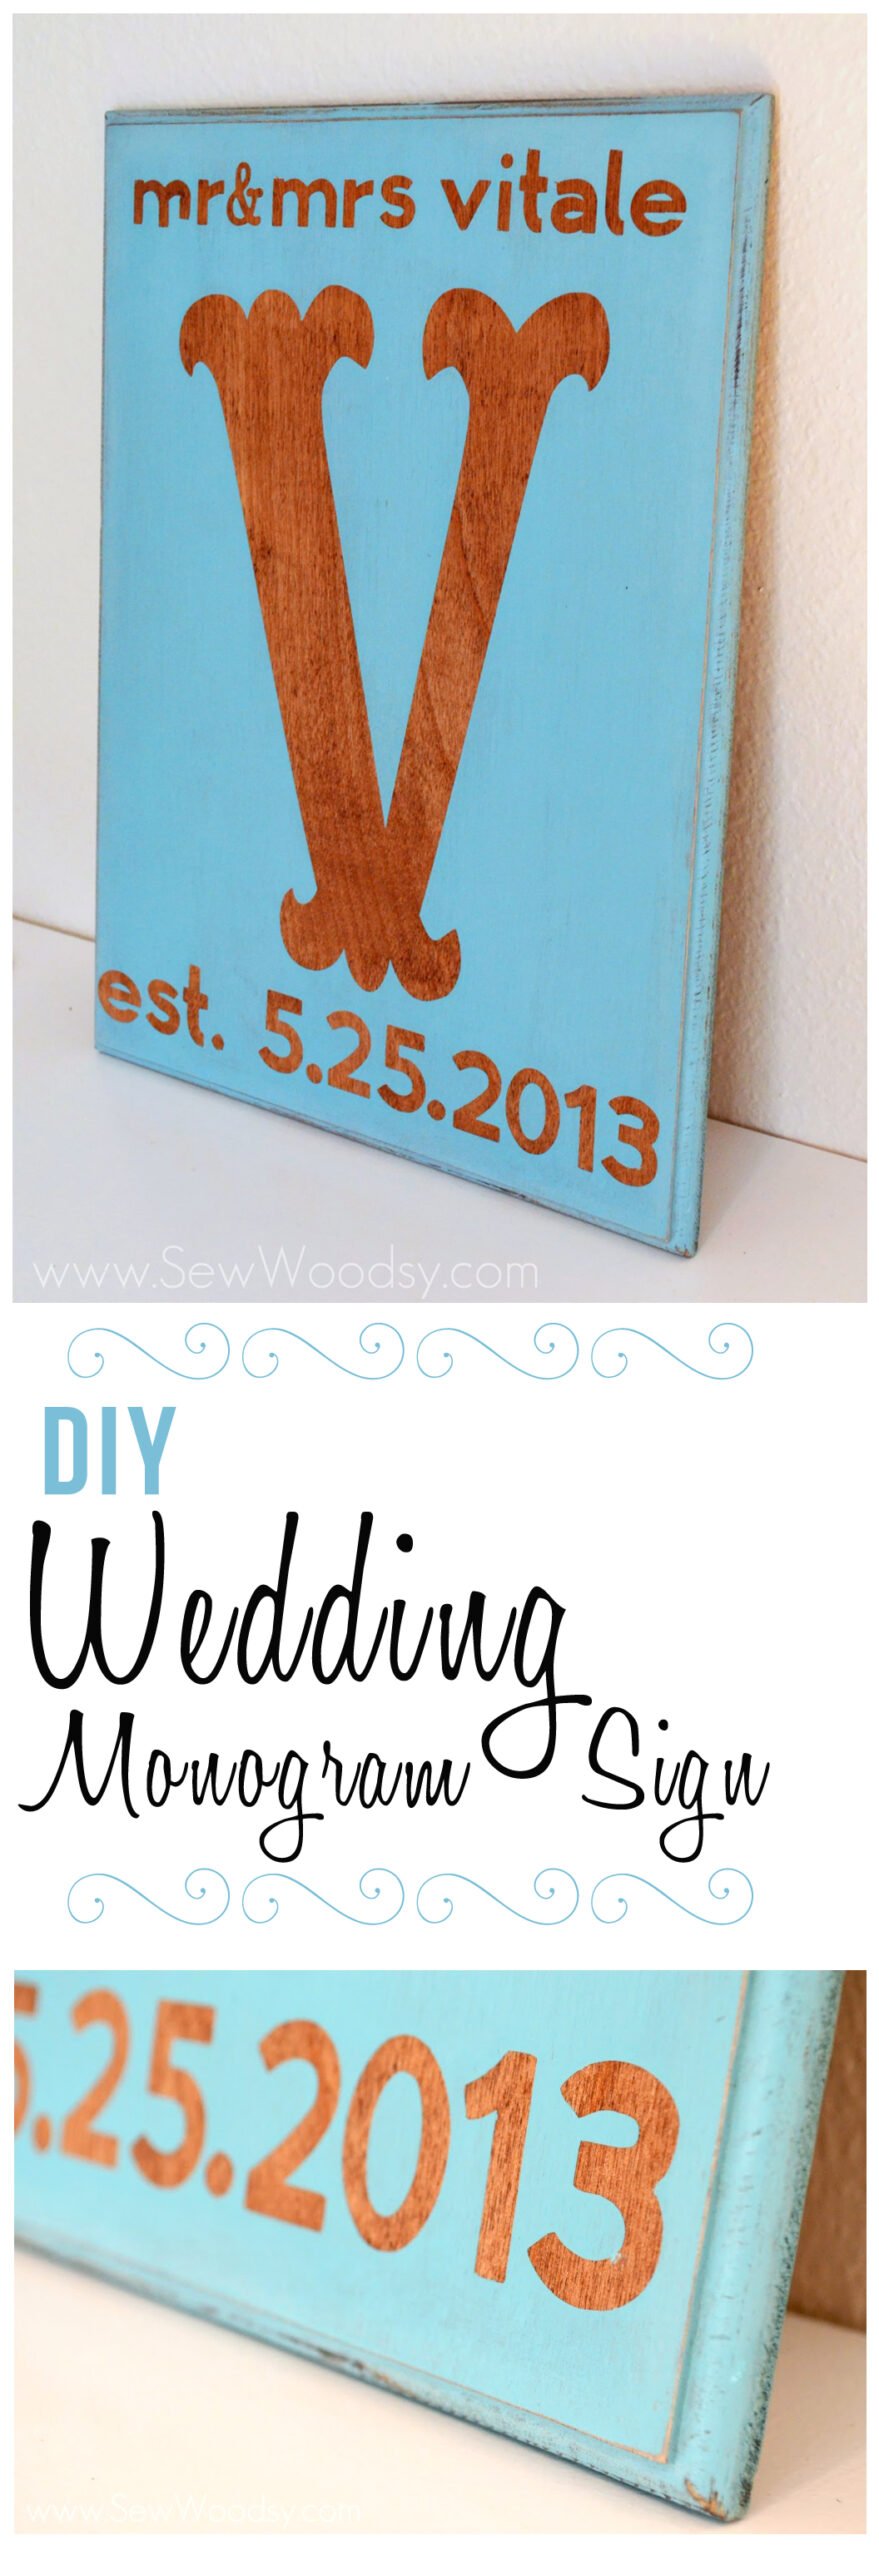 DIY Wedding Monogram Sign from SewWoodsy.com #cricut #wedding #DIY #craft